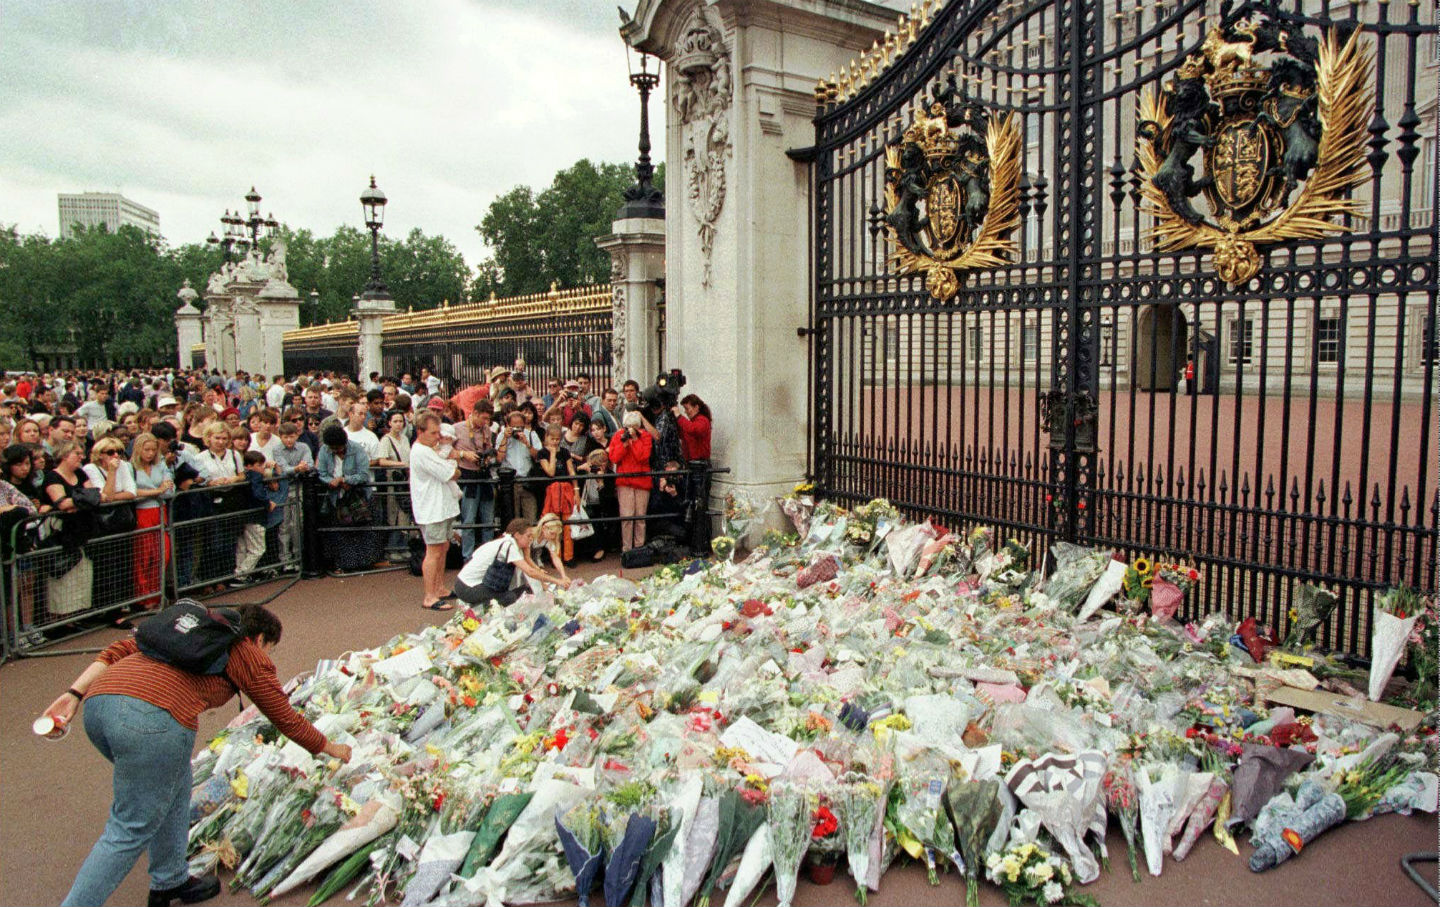 August 31, 1997: Diana, Princess of Wales, Dies in a Car Crash in Paris